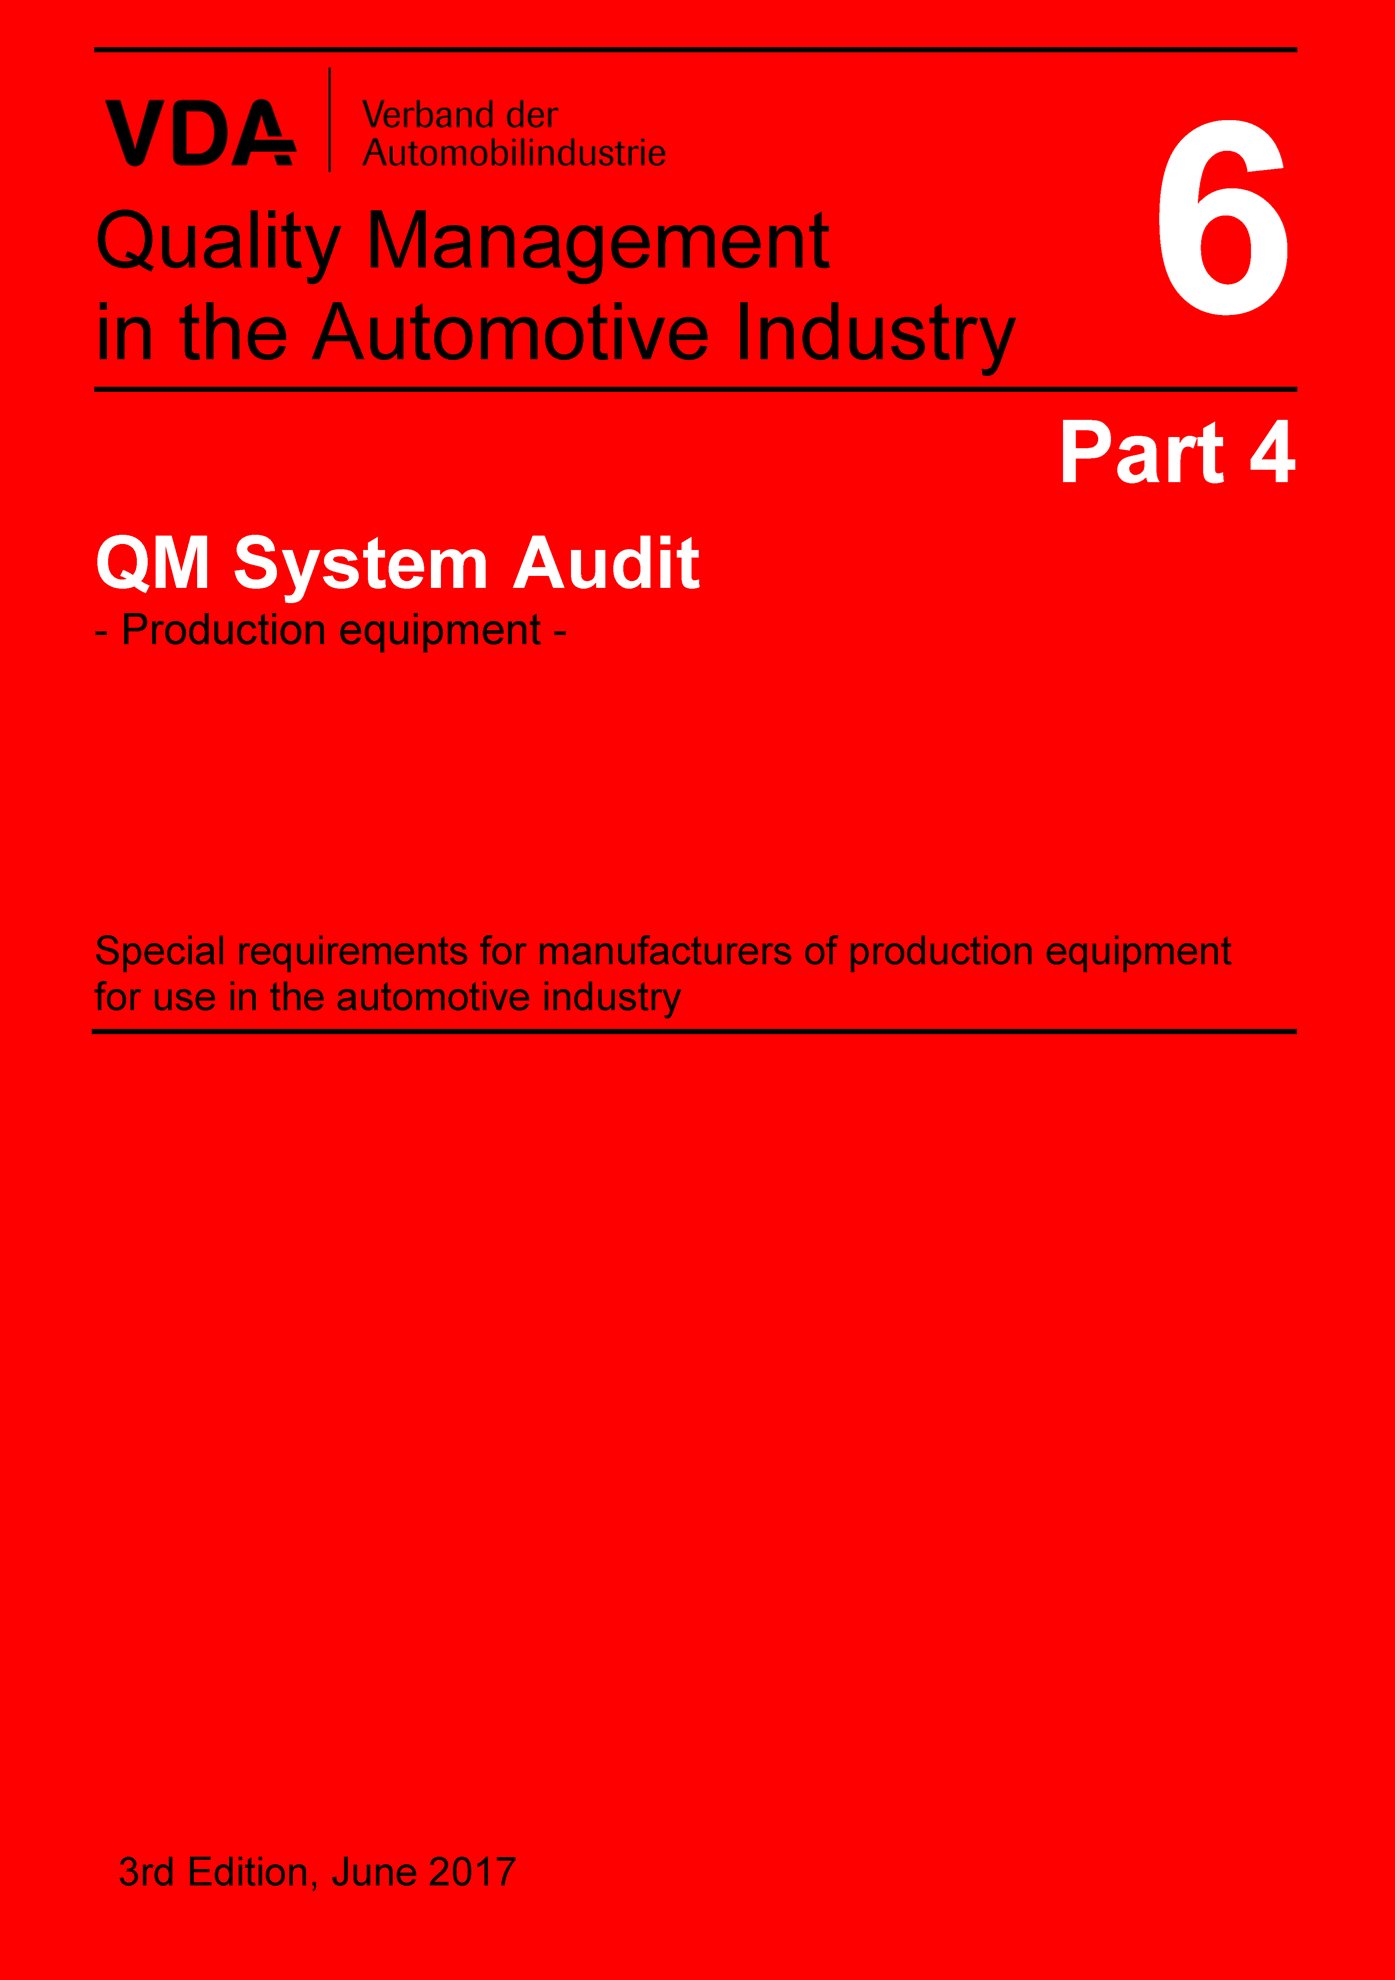 VDA Volume 6 Part 4_3rd Edition 2017 QM System Audit - Production equipment - 1.1.2017